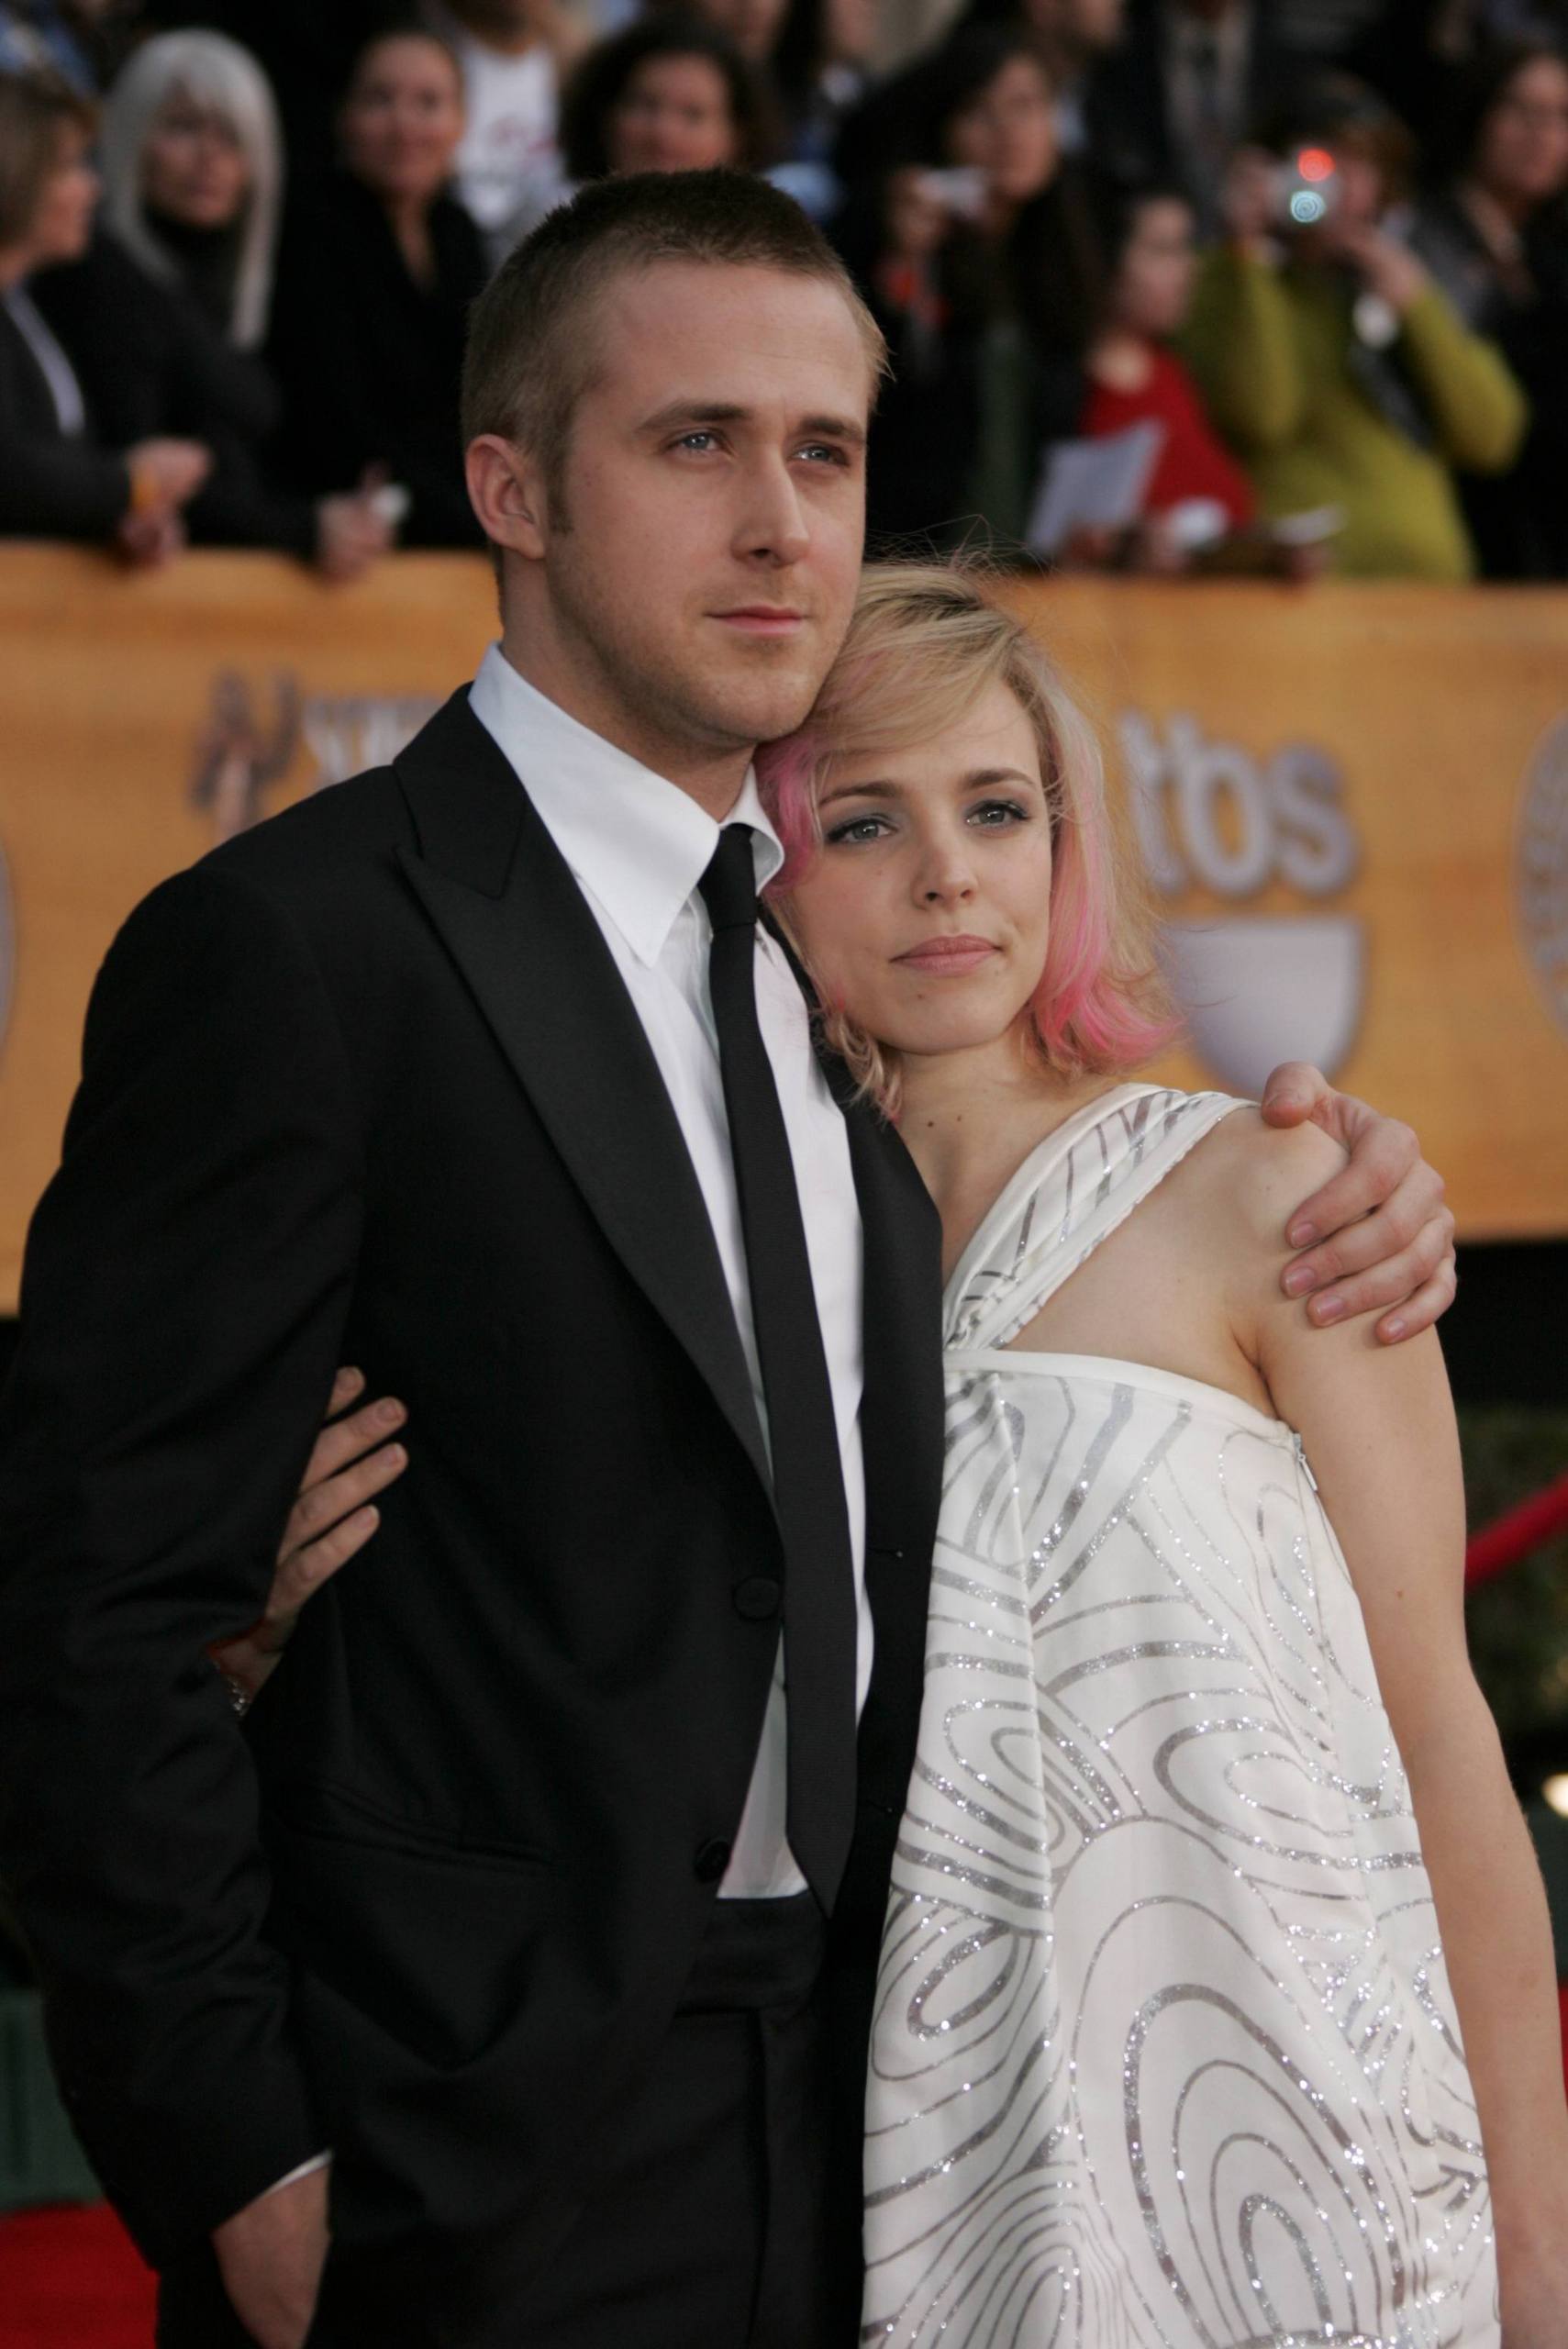 Rachel mcadams and ryan gosling dating